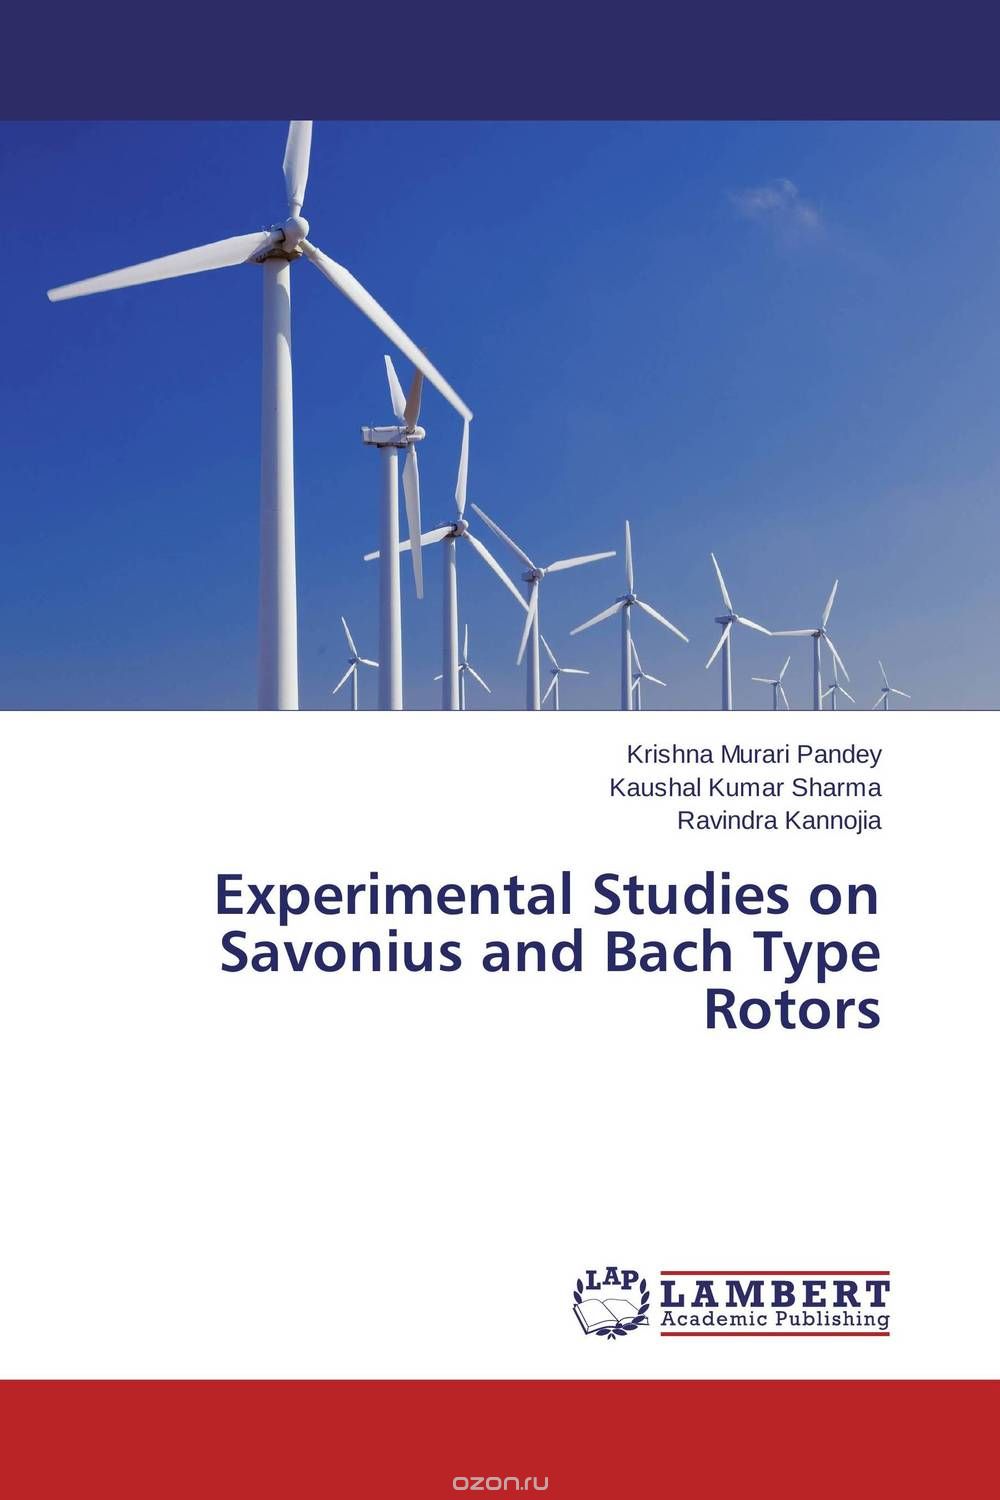 Скачать книгу "Experimental Studies on Savonius and Bach Type Rotors"